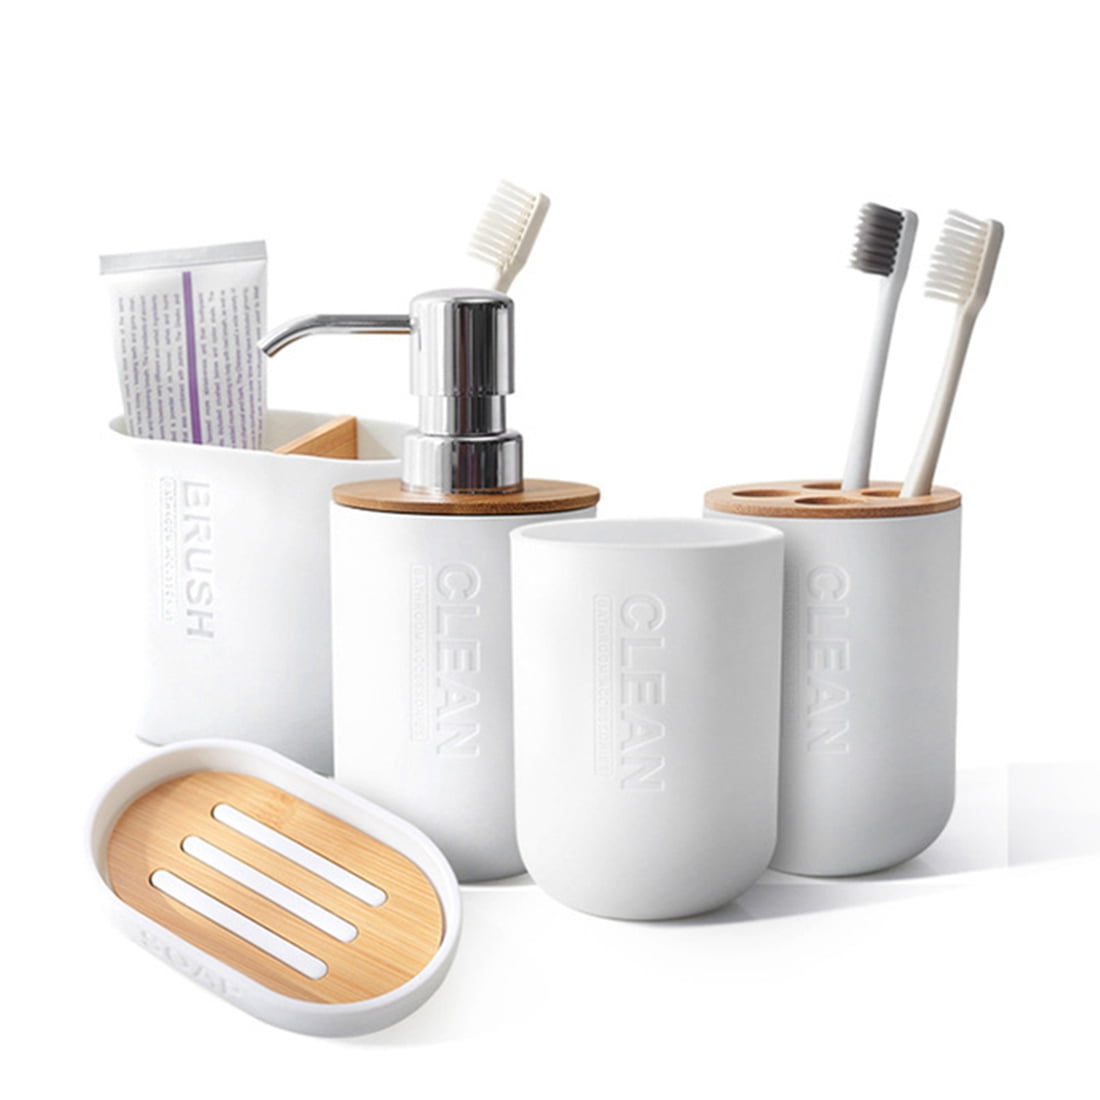 ZALAGA Household Toiletries Set Lotion Bottle Toothbrush Mouthwash Cup